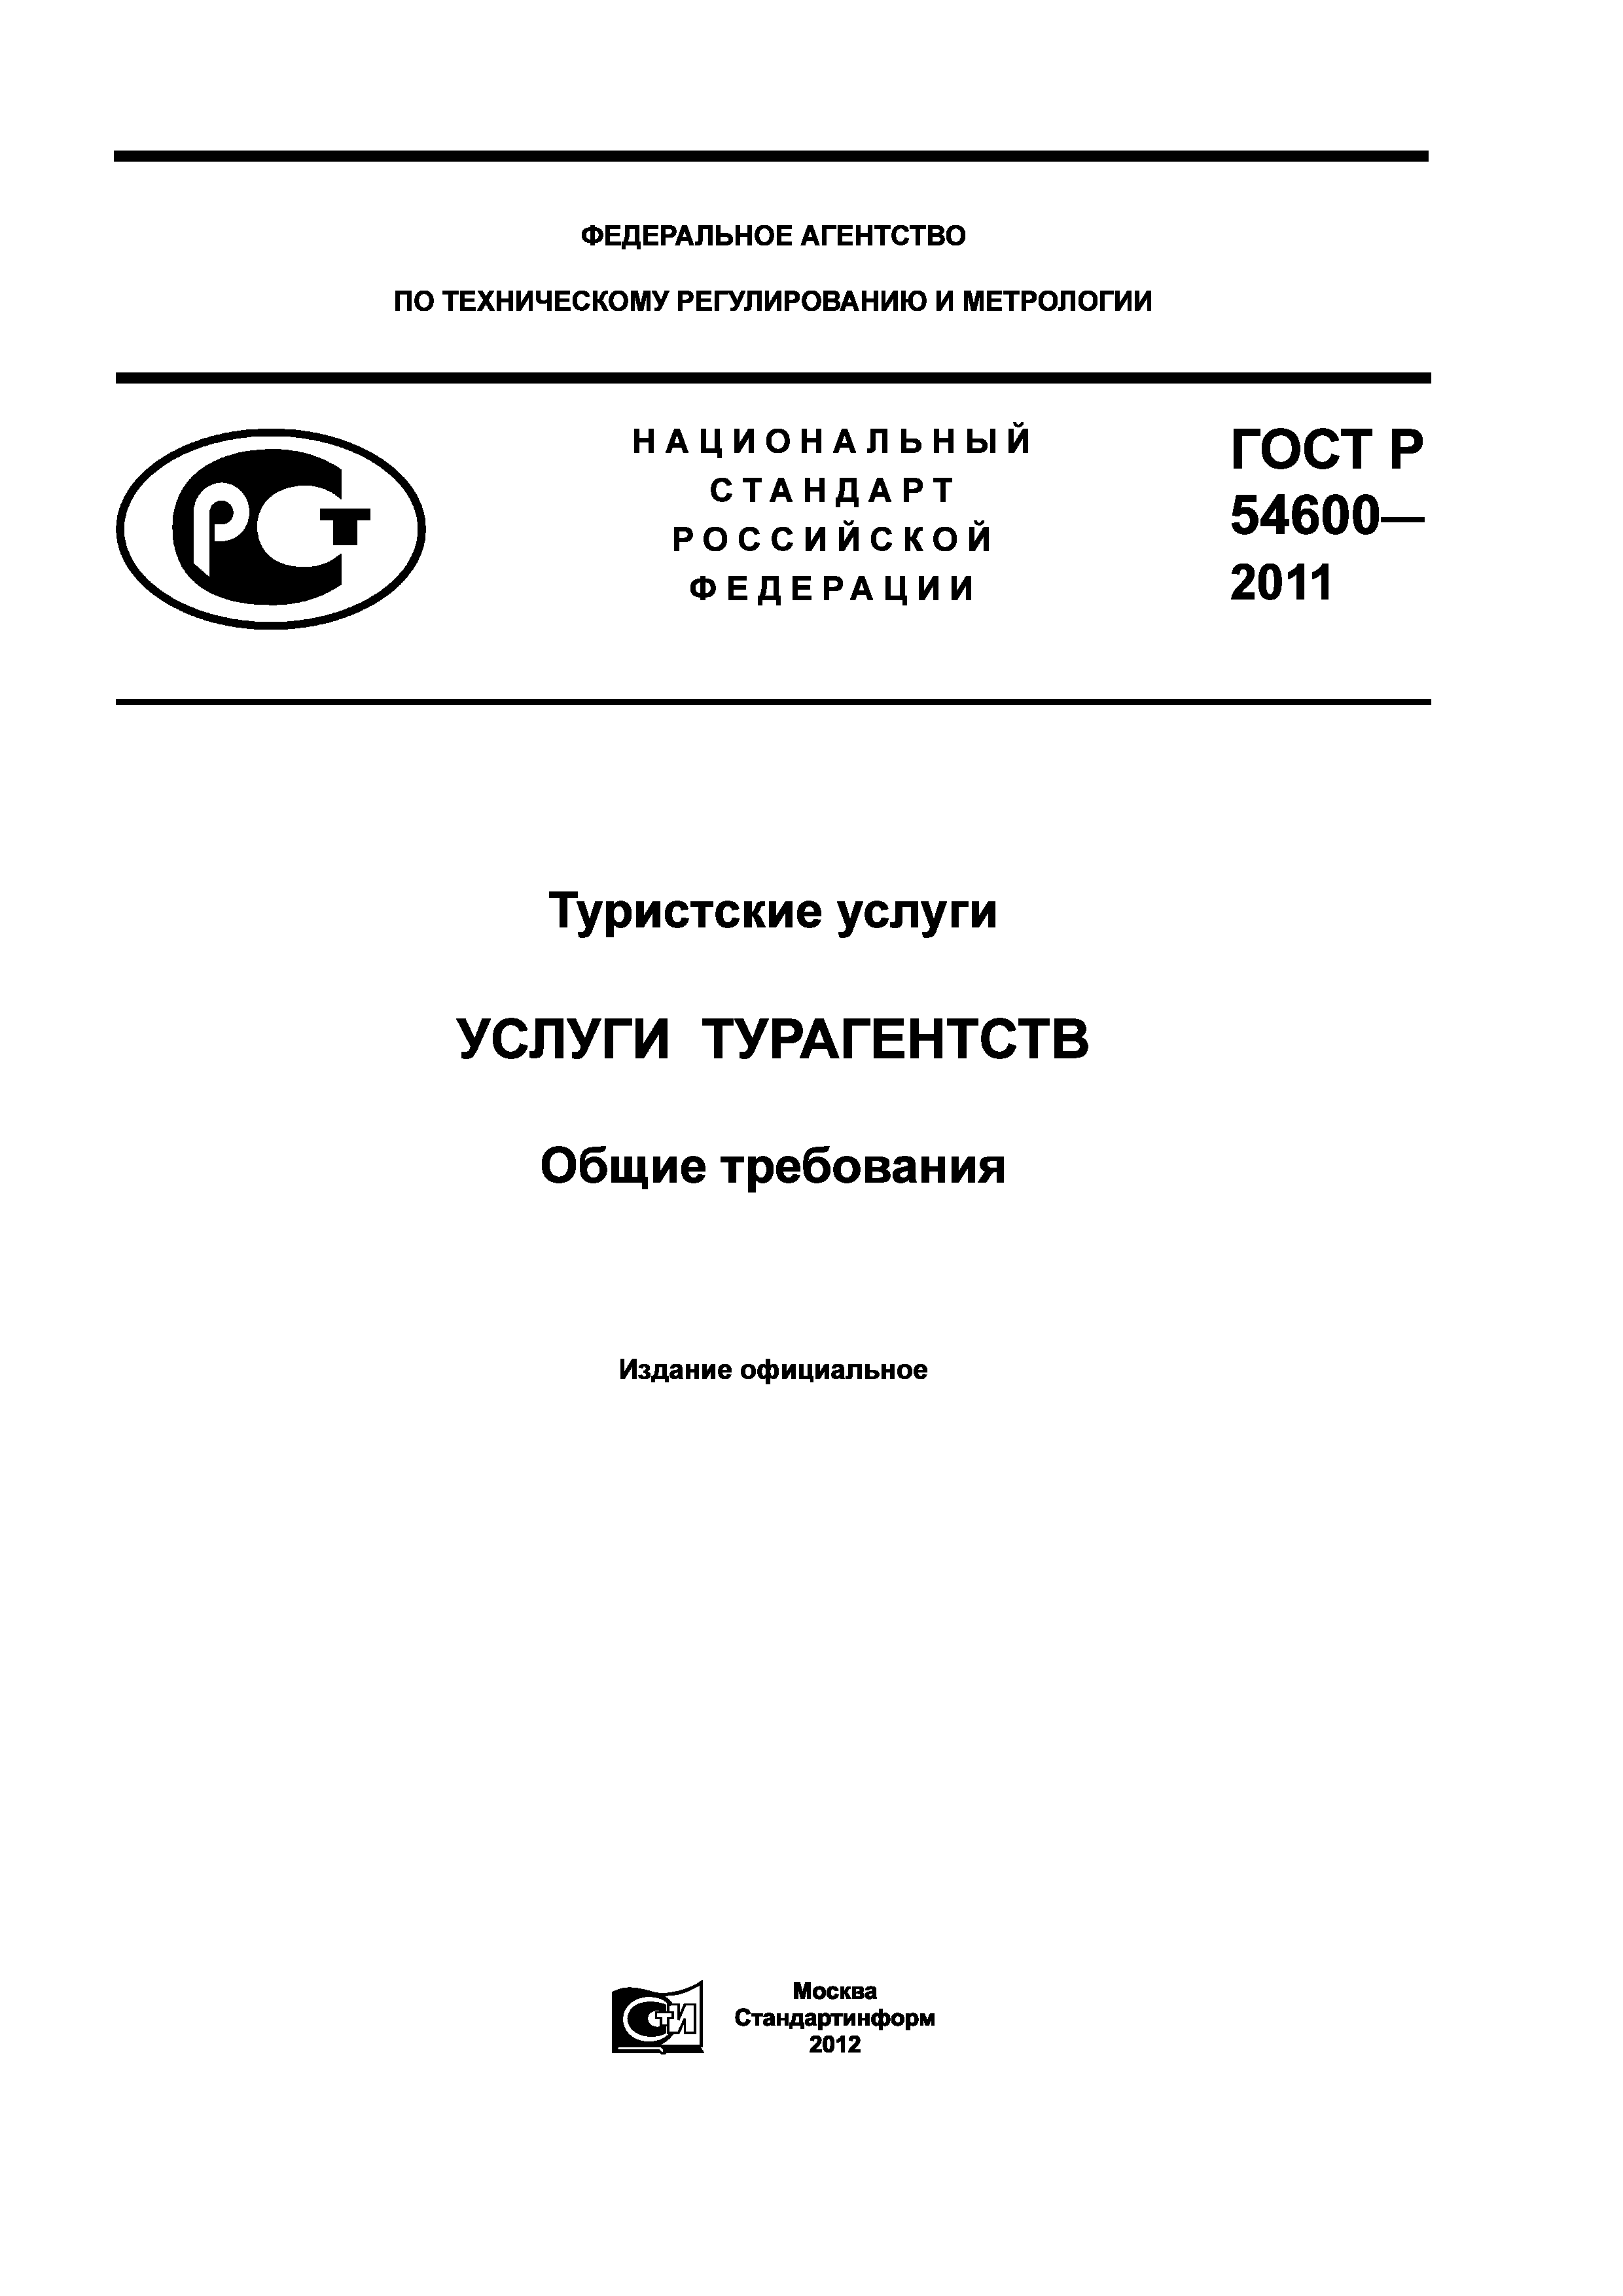 ГОСТ Р 54600-2011